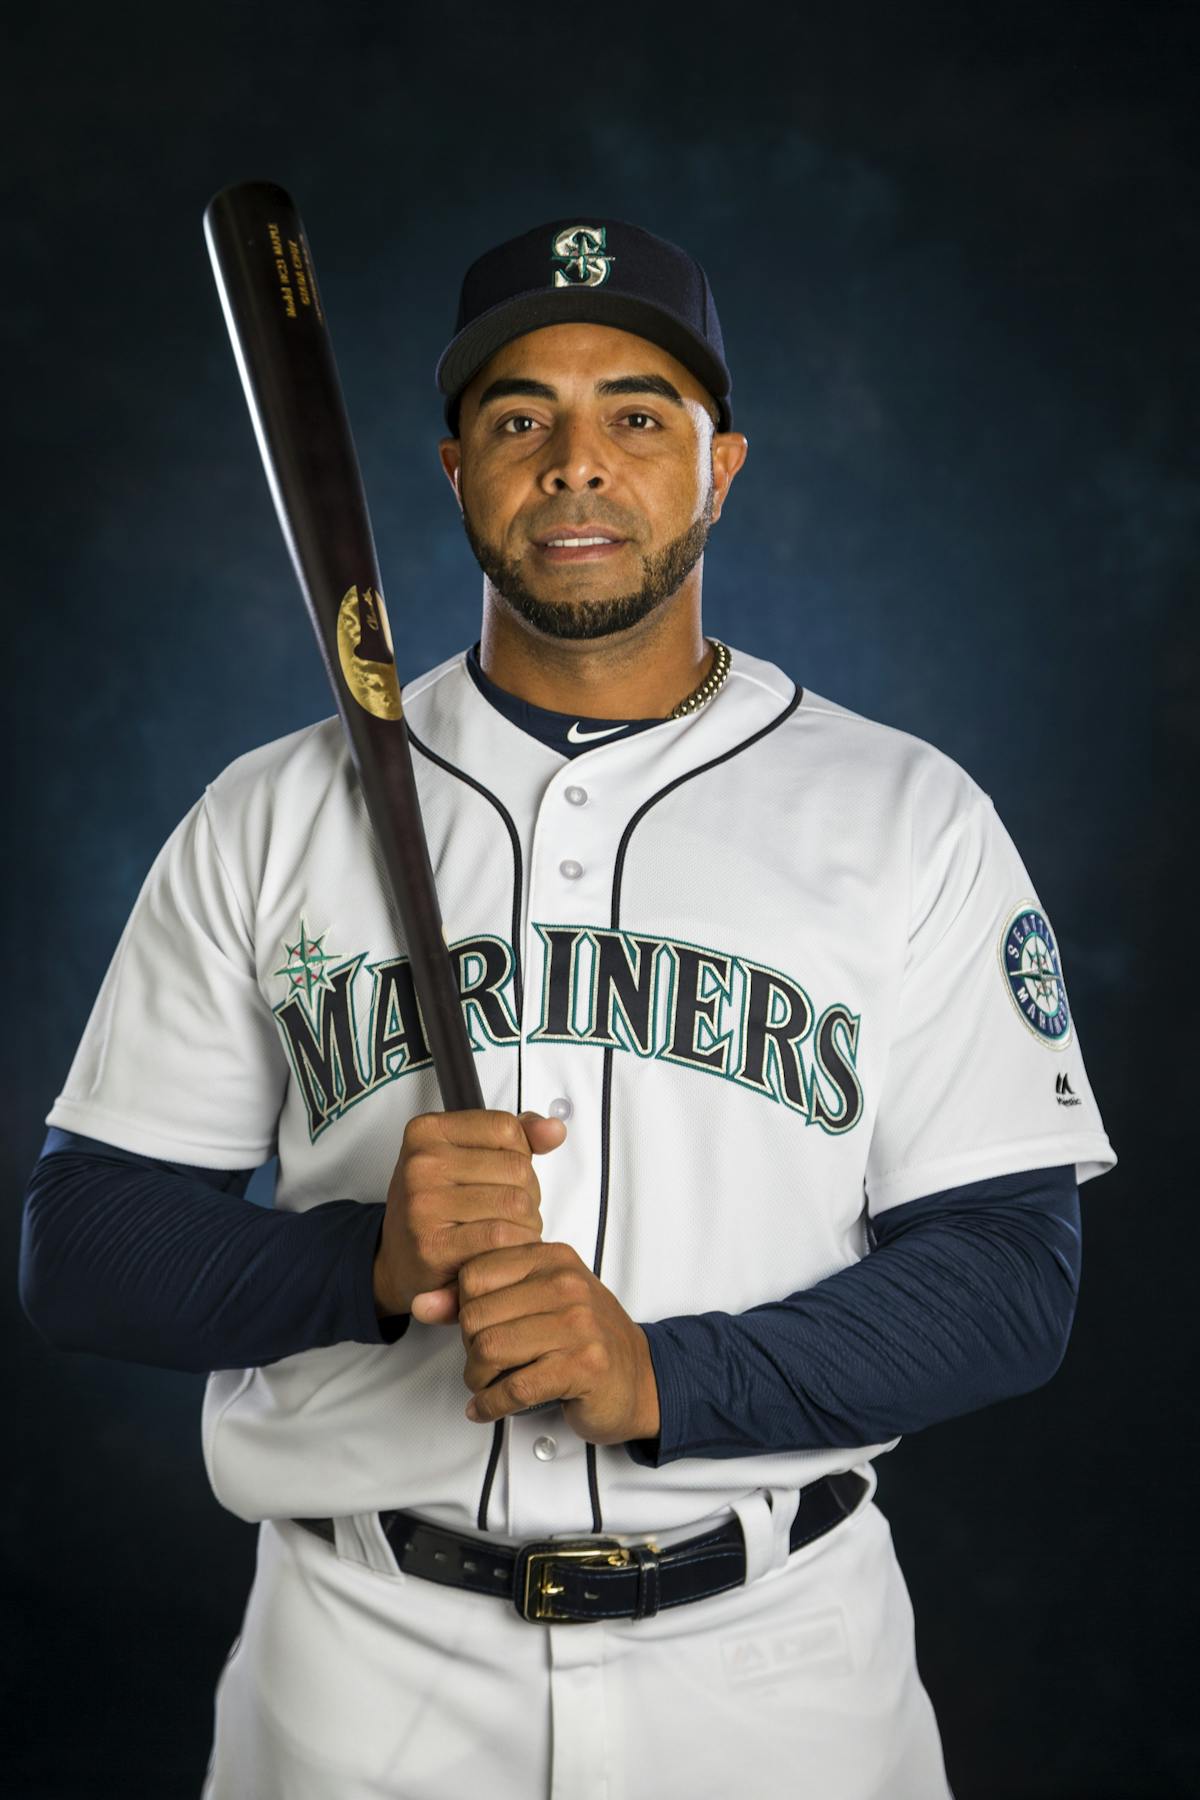 Nelson Cruz wearing a uniform and holding a baseball bat